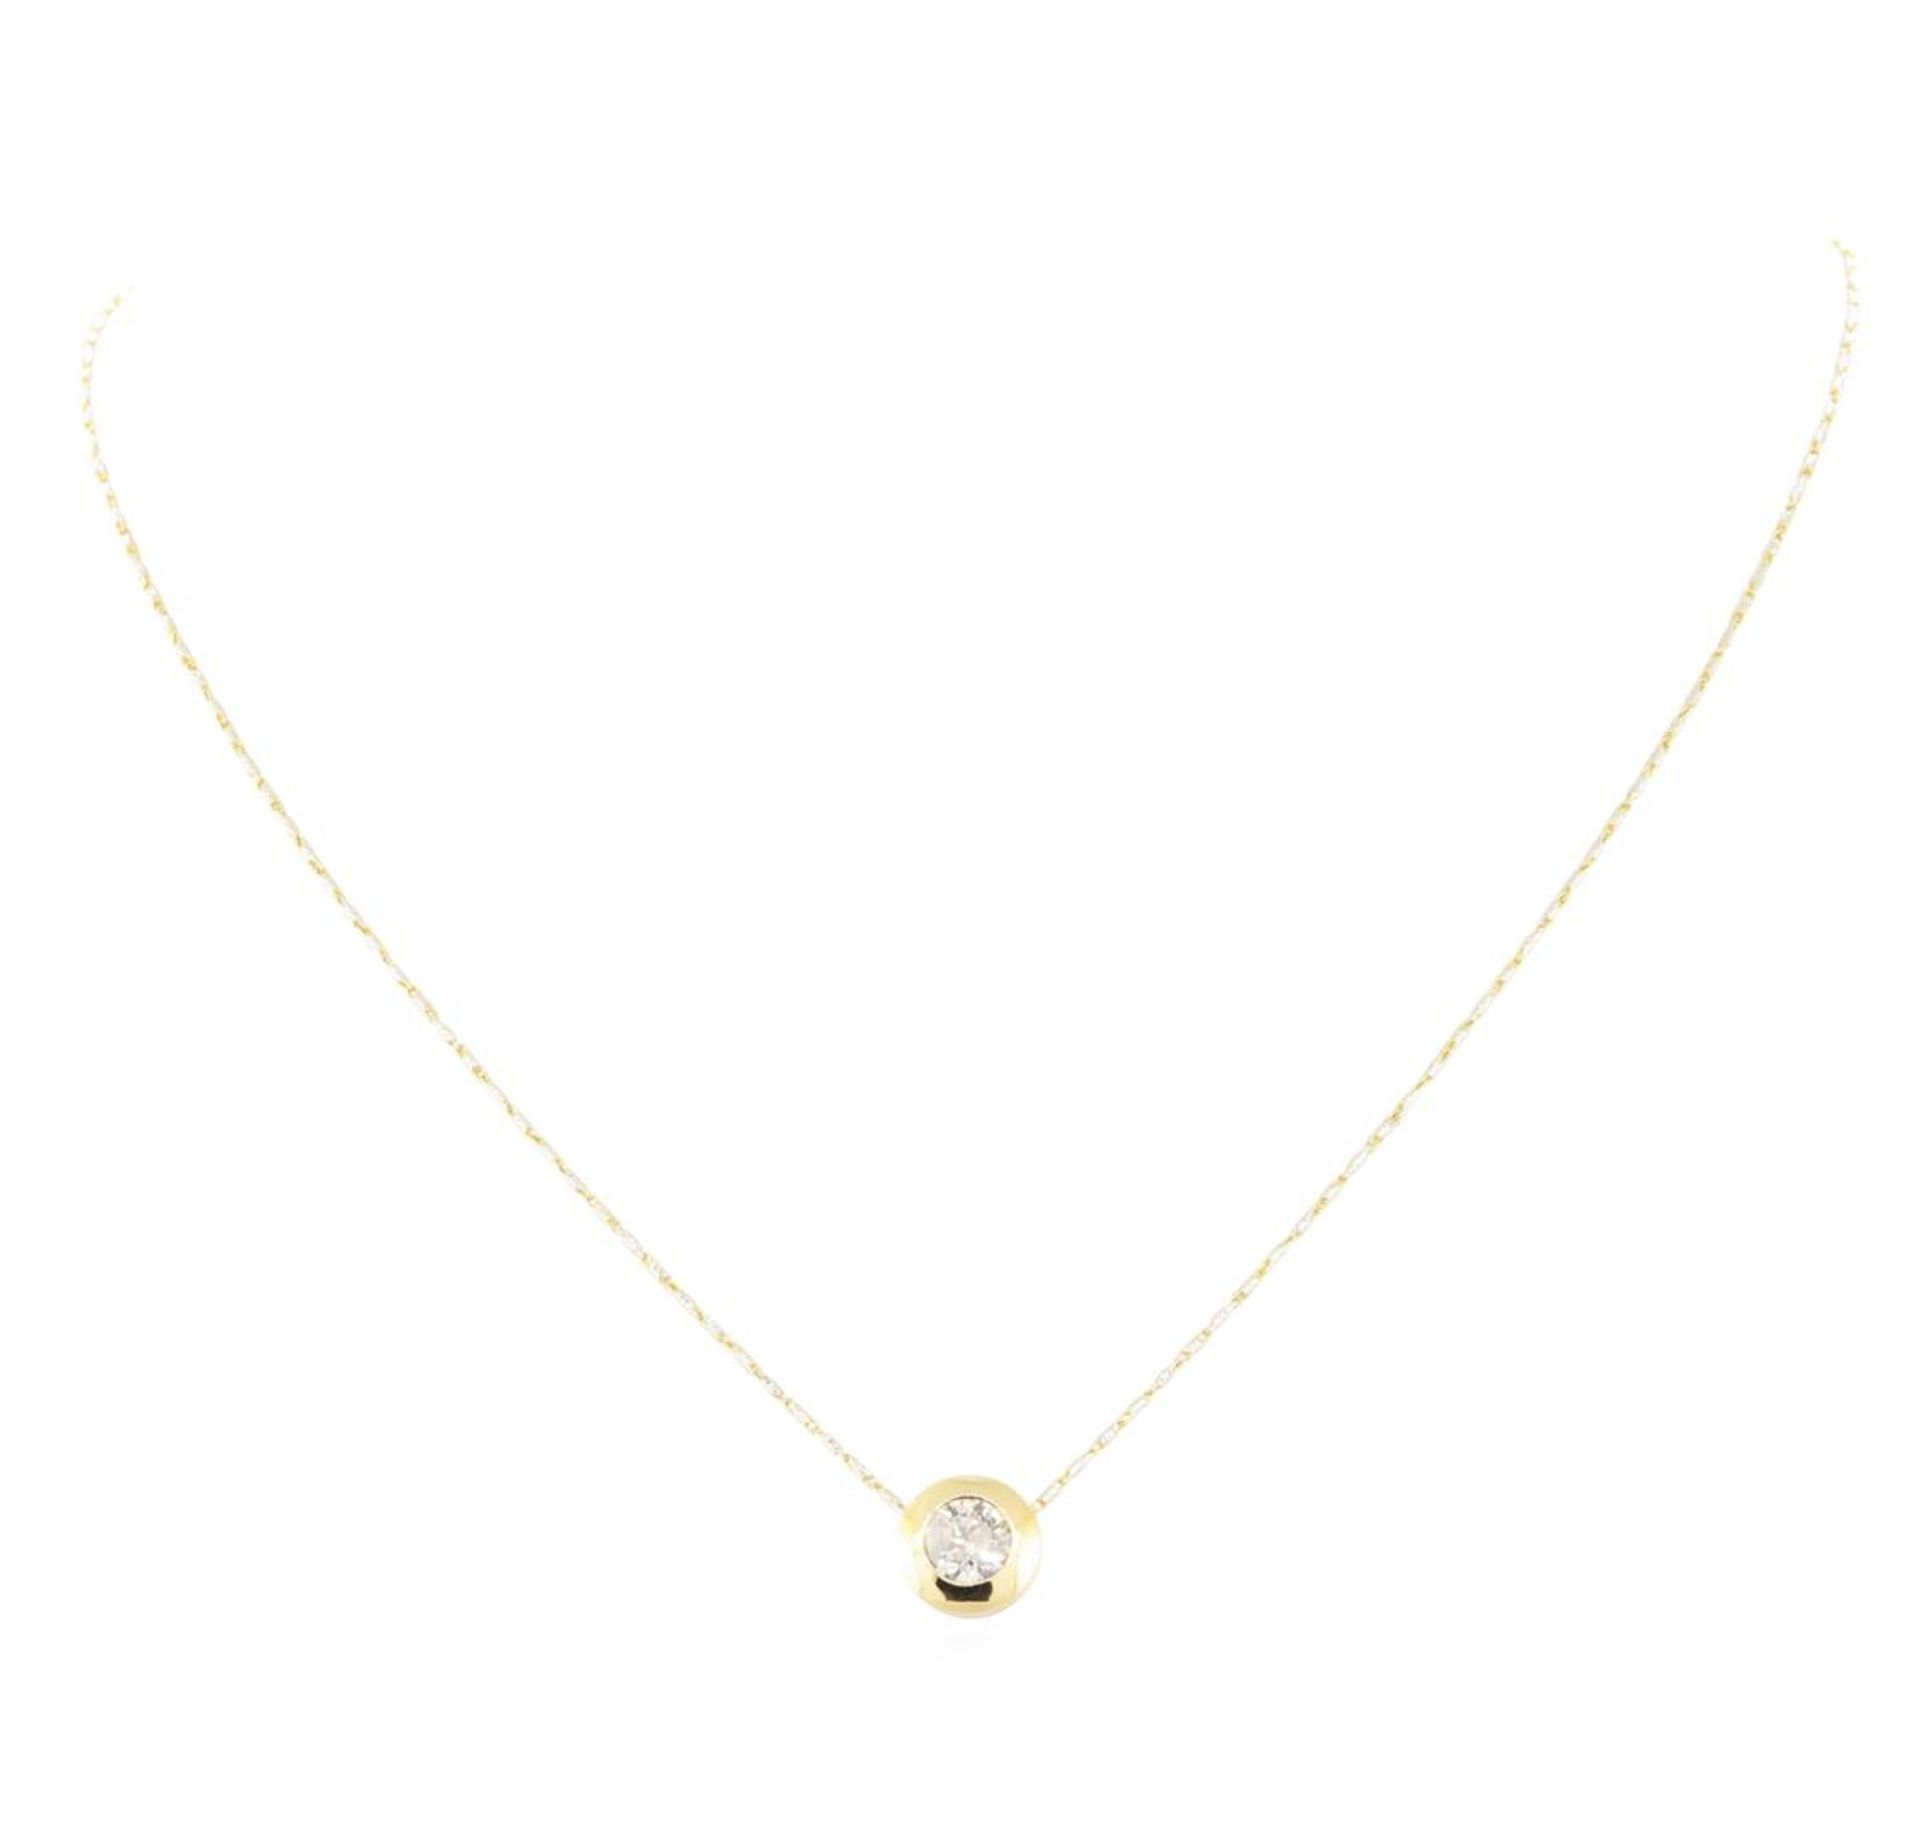 1.02 ctw Diamond Necklace - 14KT Yellow Gold